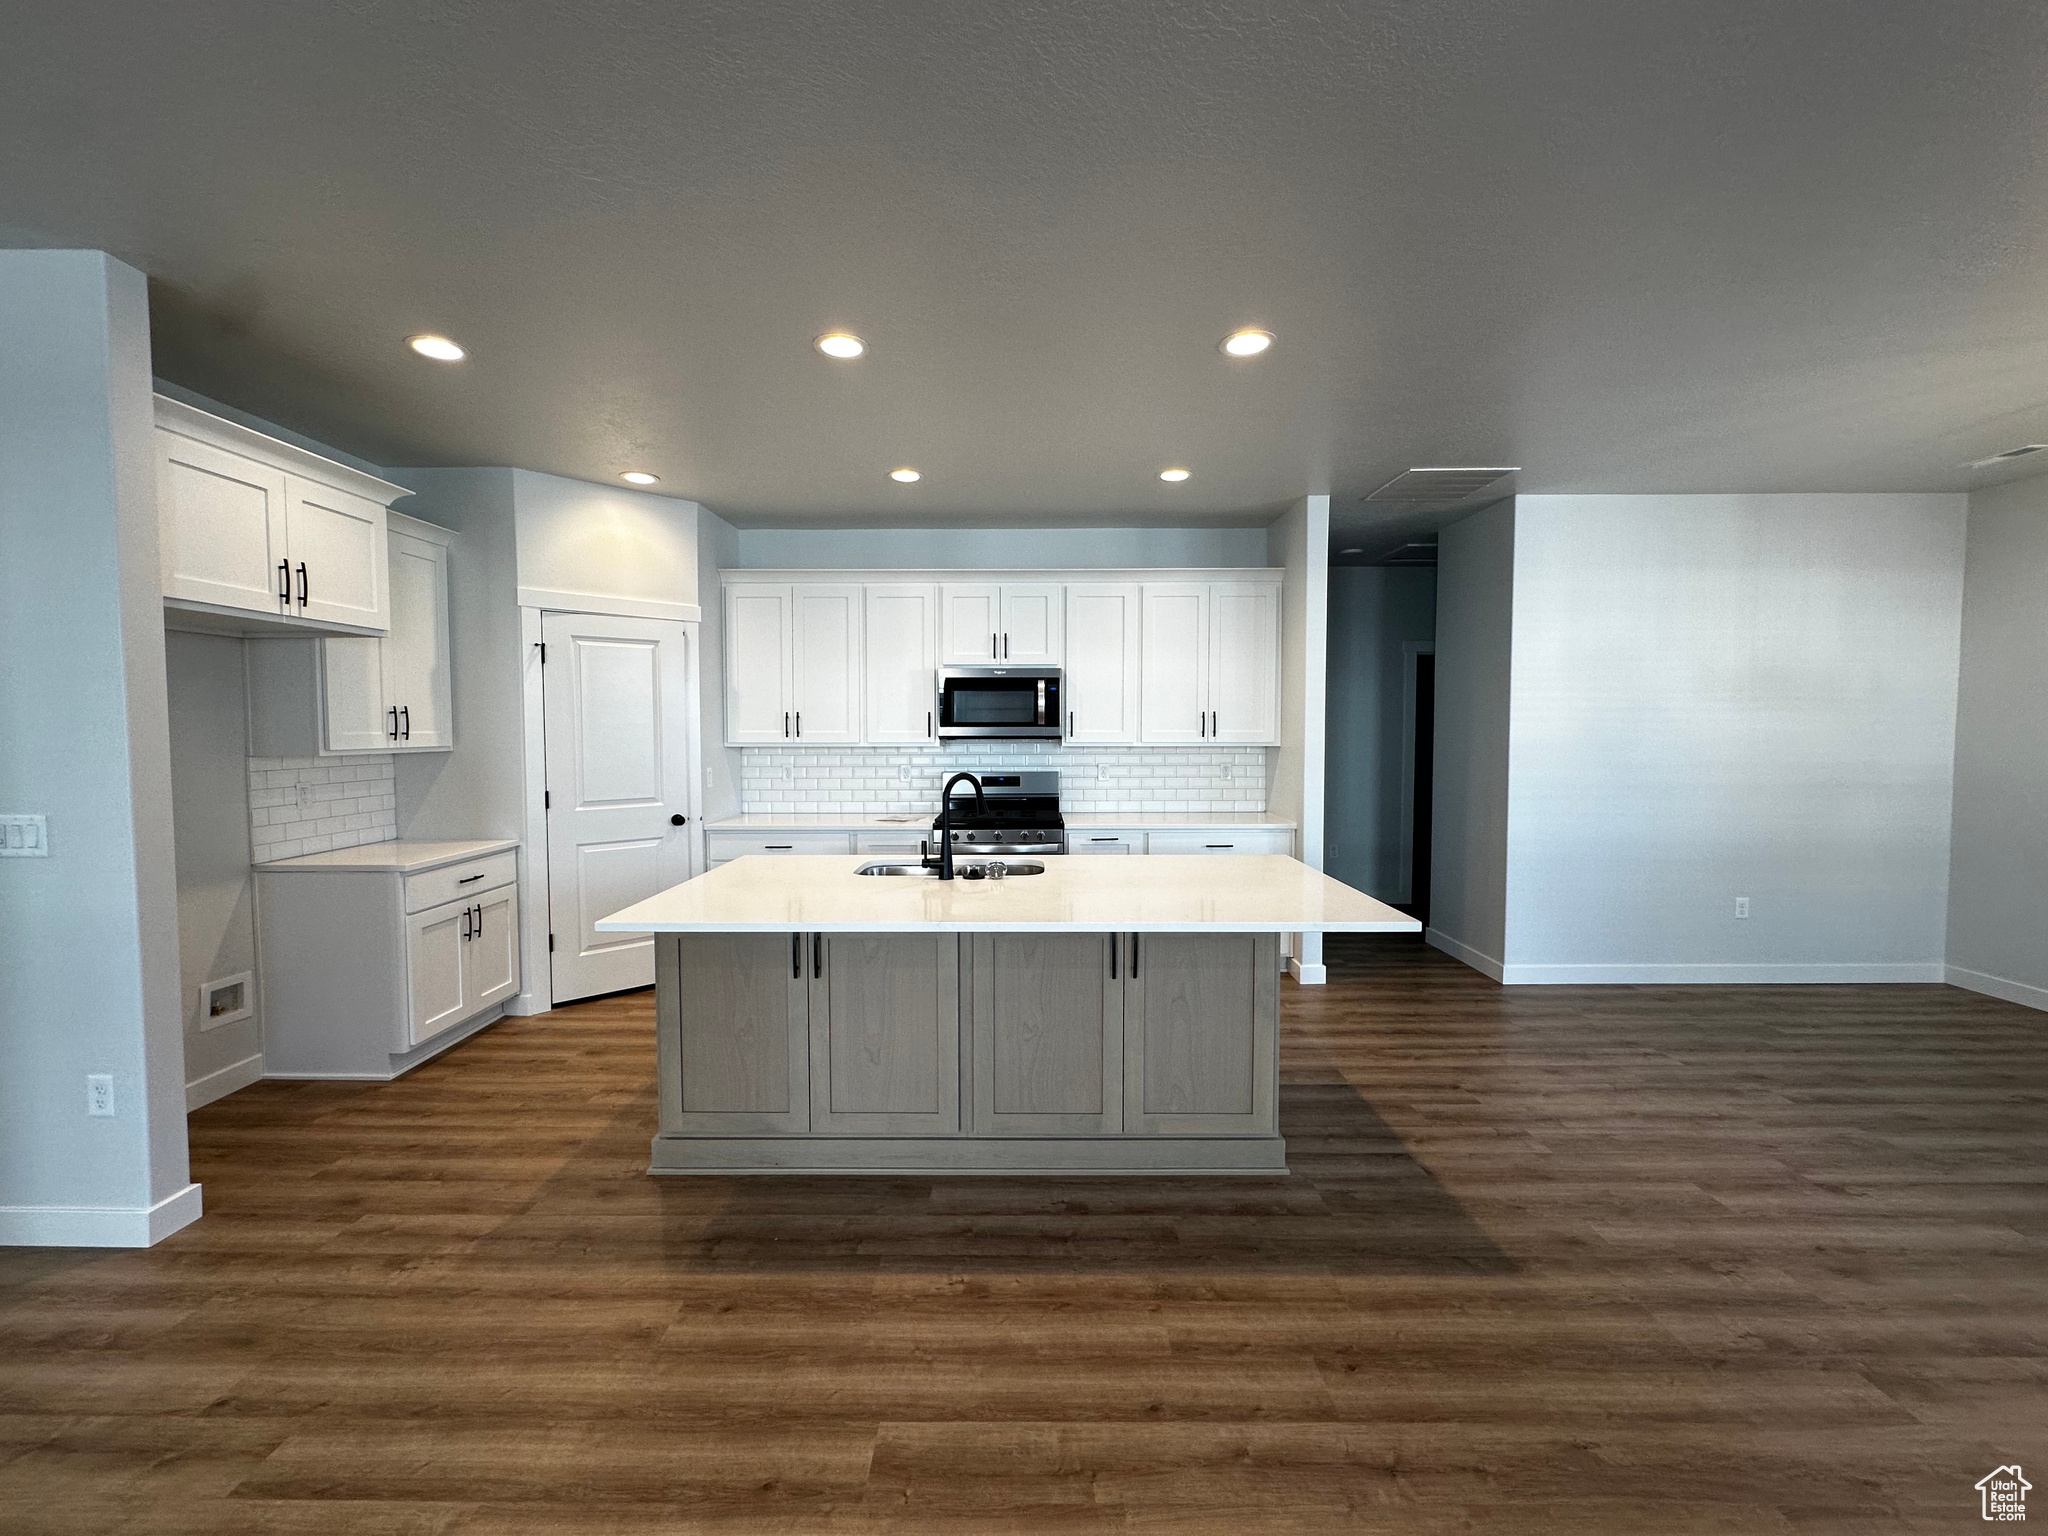 Kitchen featuring dark hardwood / wood-style flooring, tasteful backsplash, white cabinets, a center island with sink, and stainless steel appliances